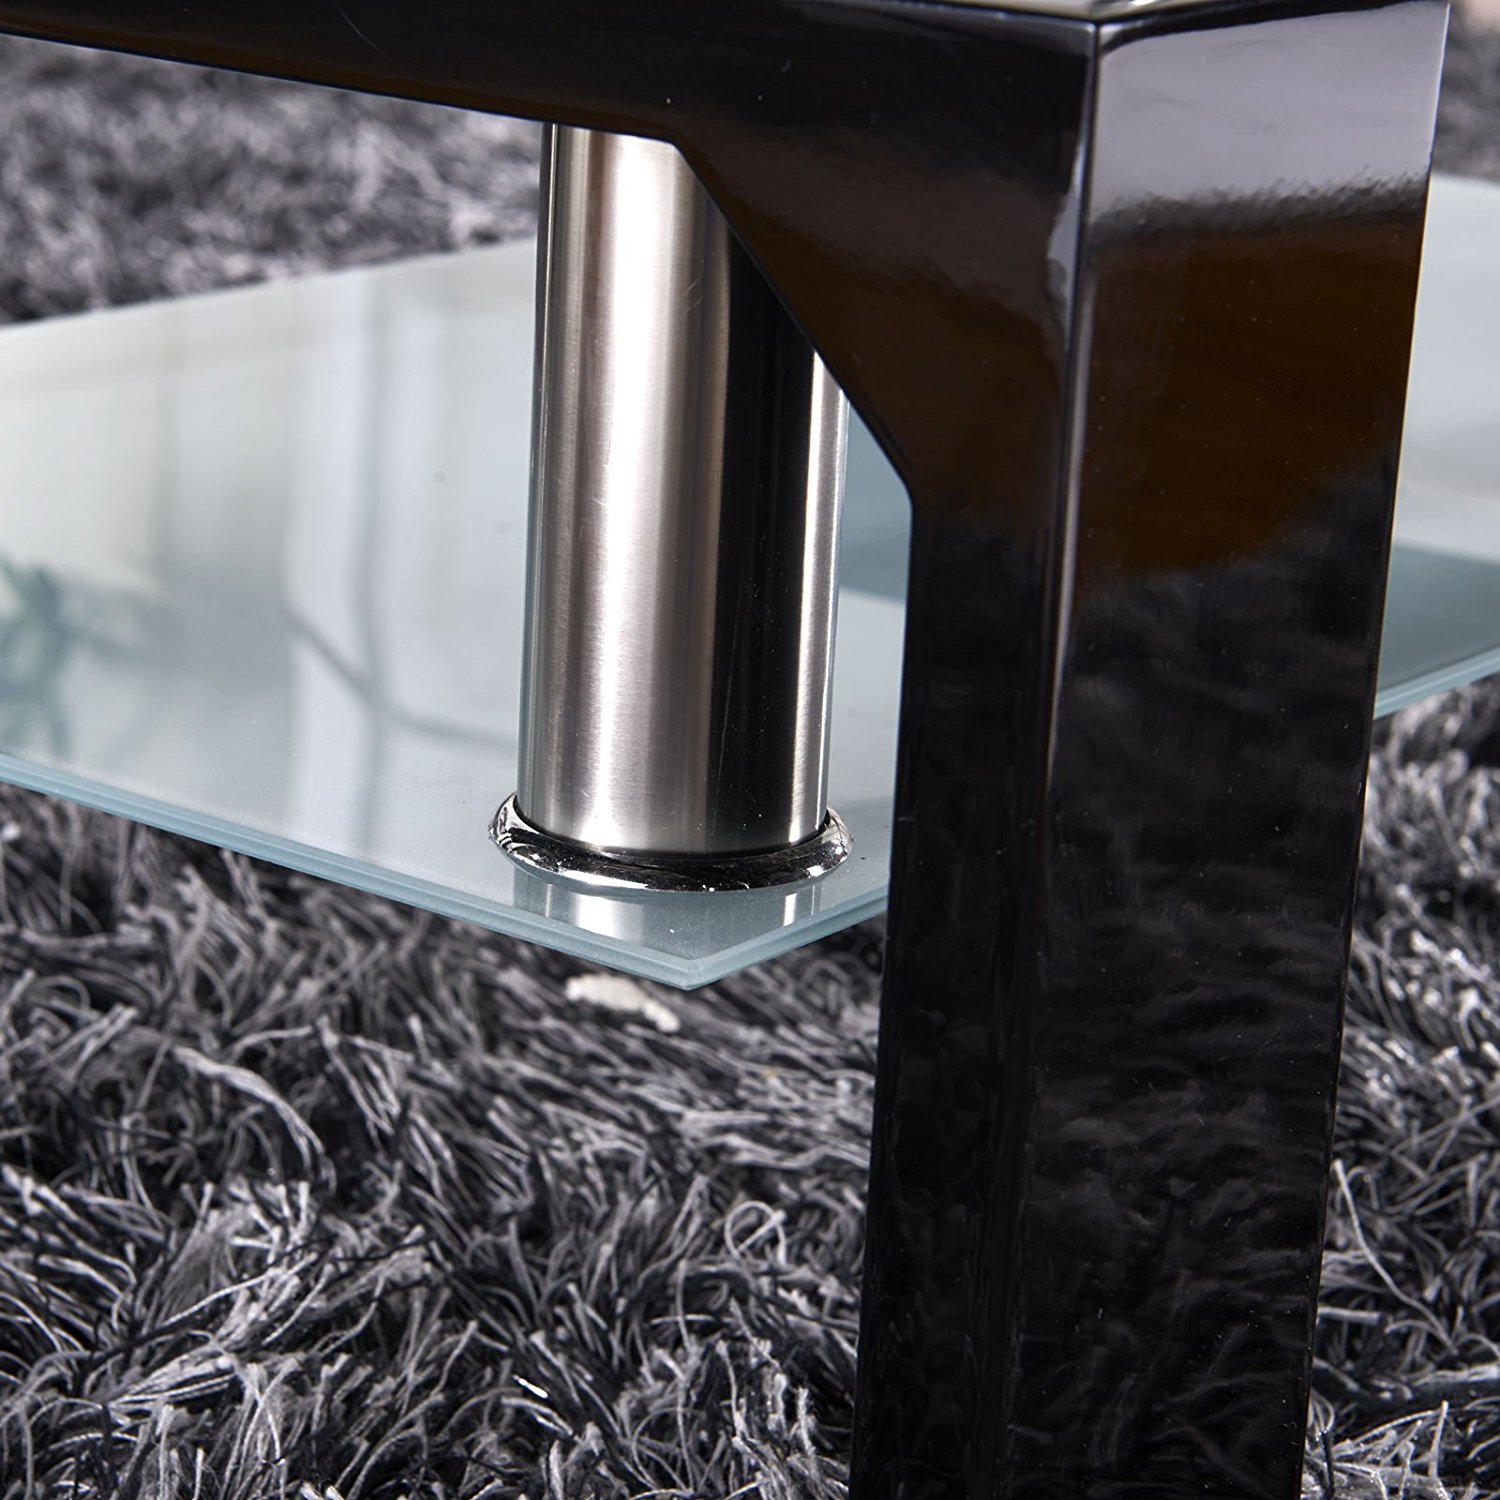 Uenjoy Rectangular Glass Coffee Table Shelf Chrome Black Wood Living Room Furniture, Black - image 5 of 8